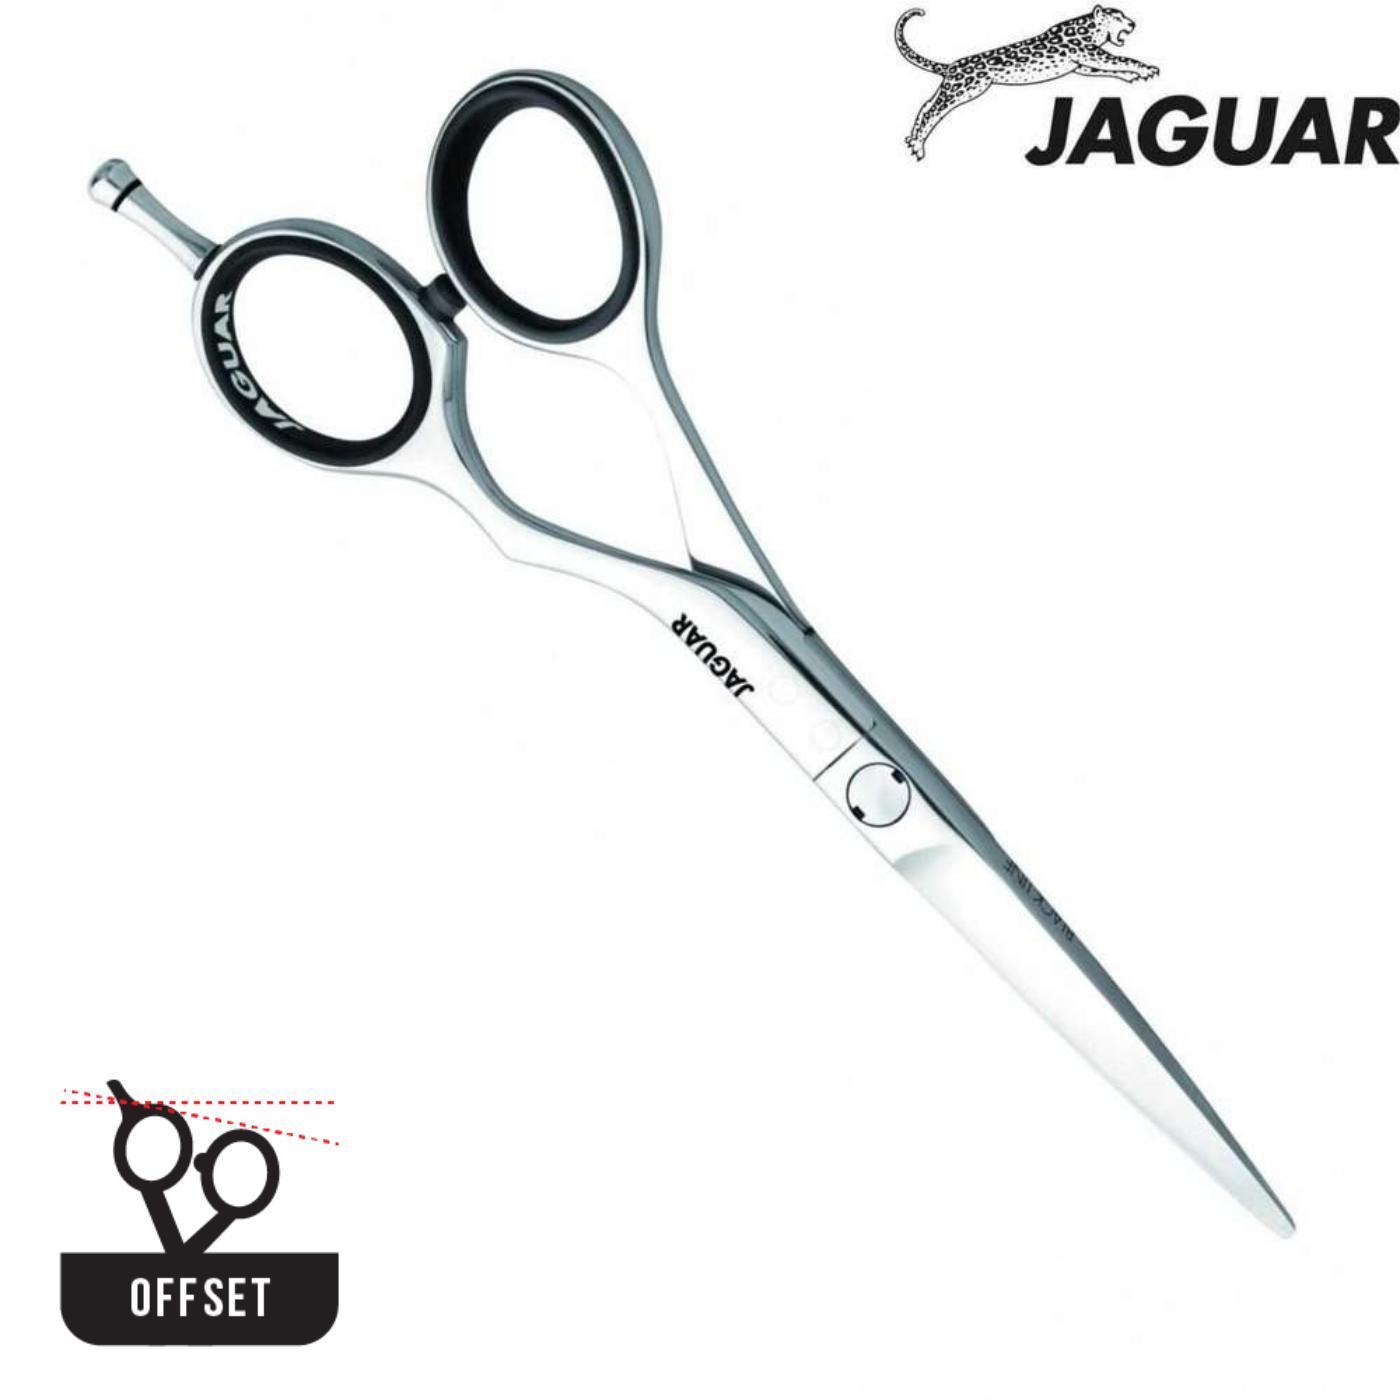 Jaguar Black Line Euro-Tech Hairdressing Scissors - Japan Scissors USA